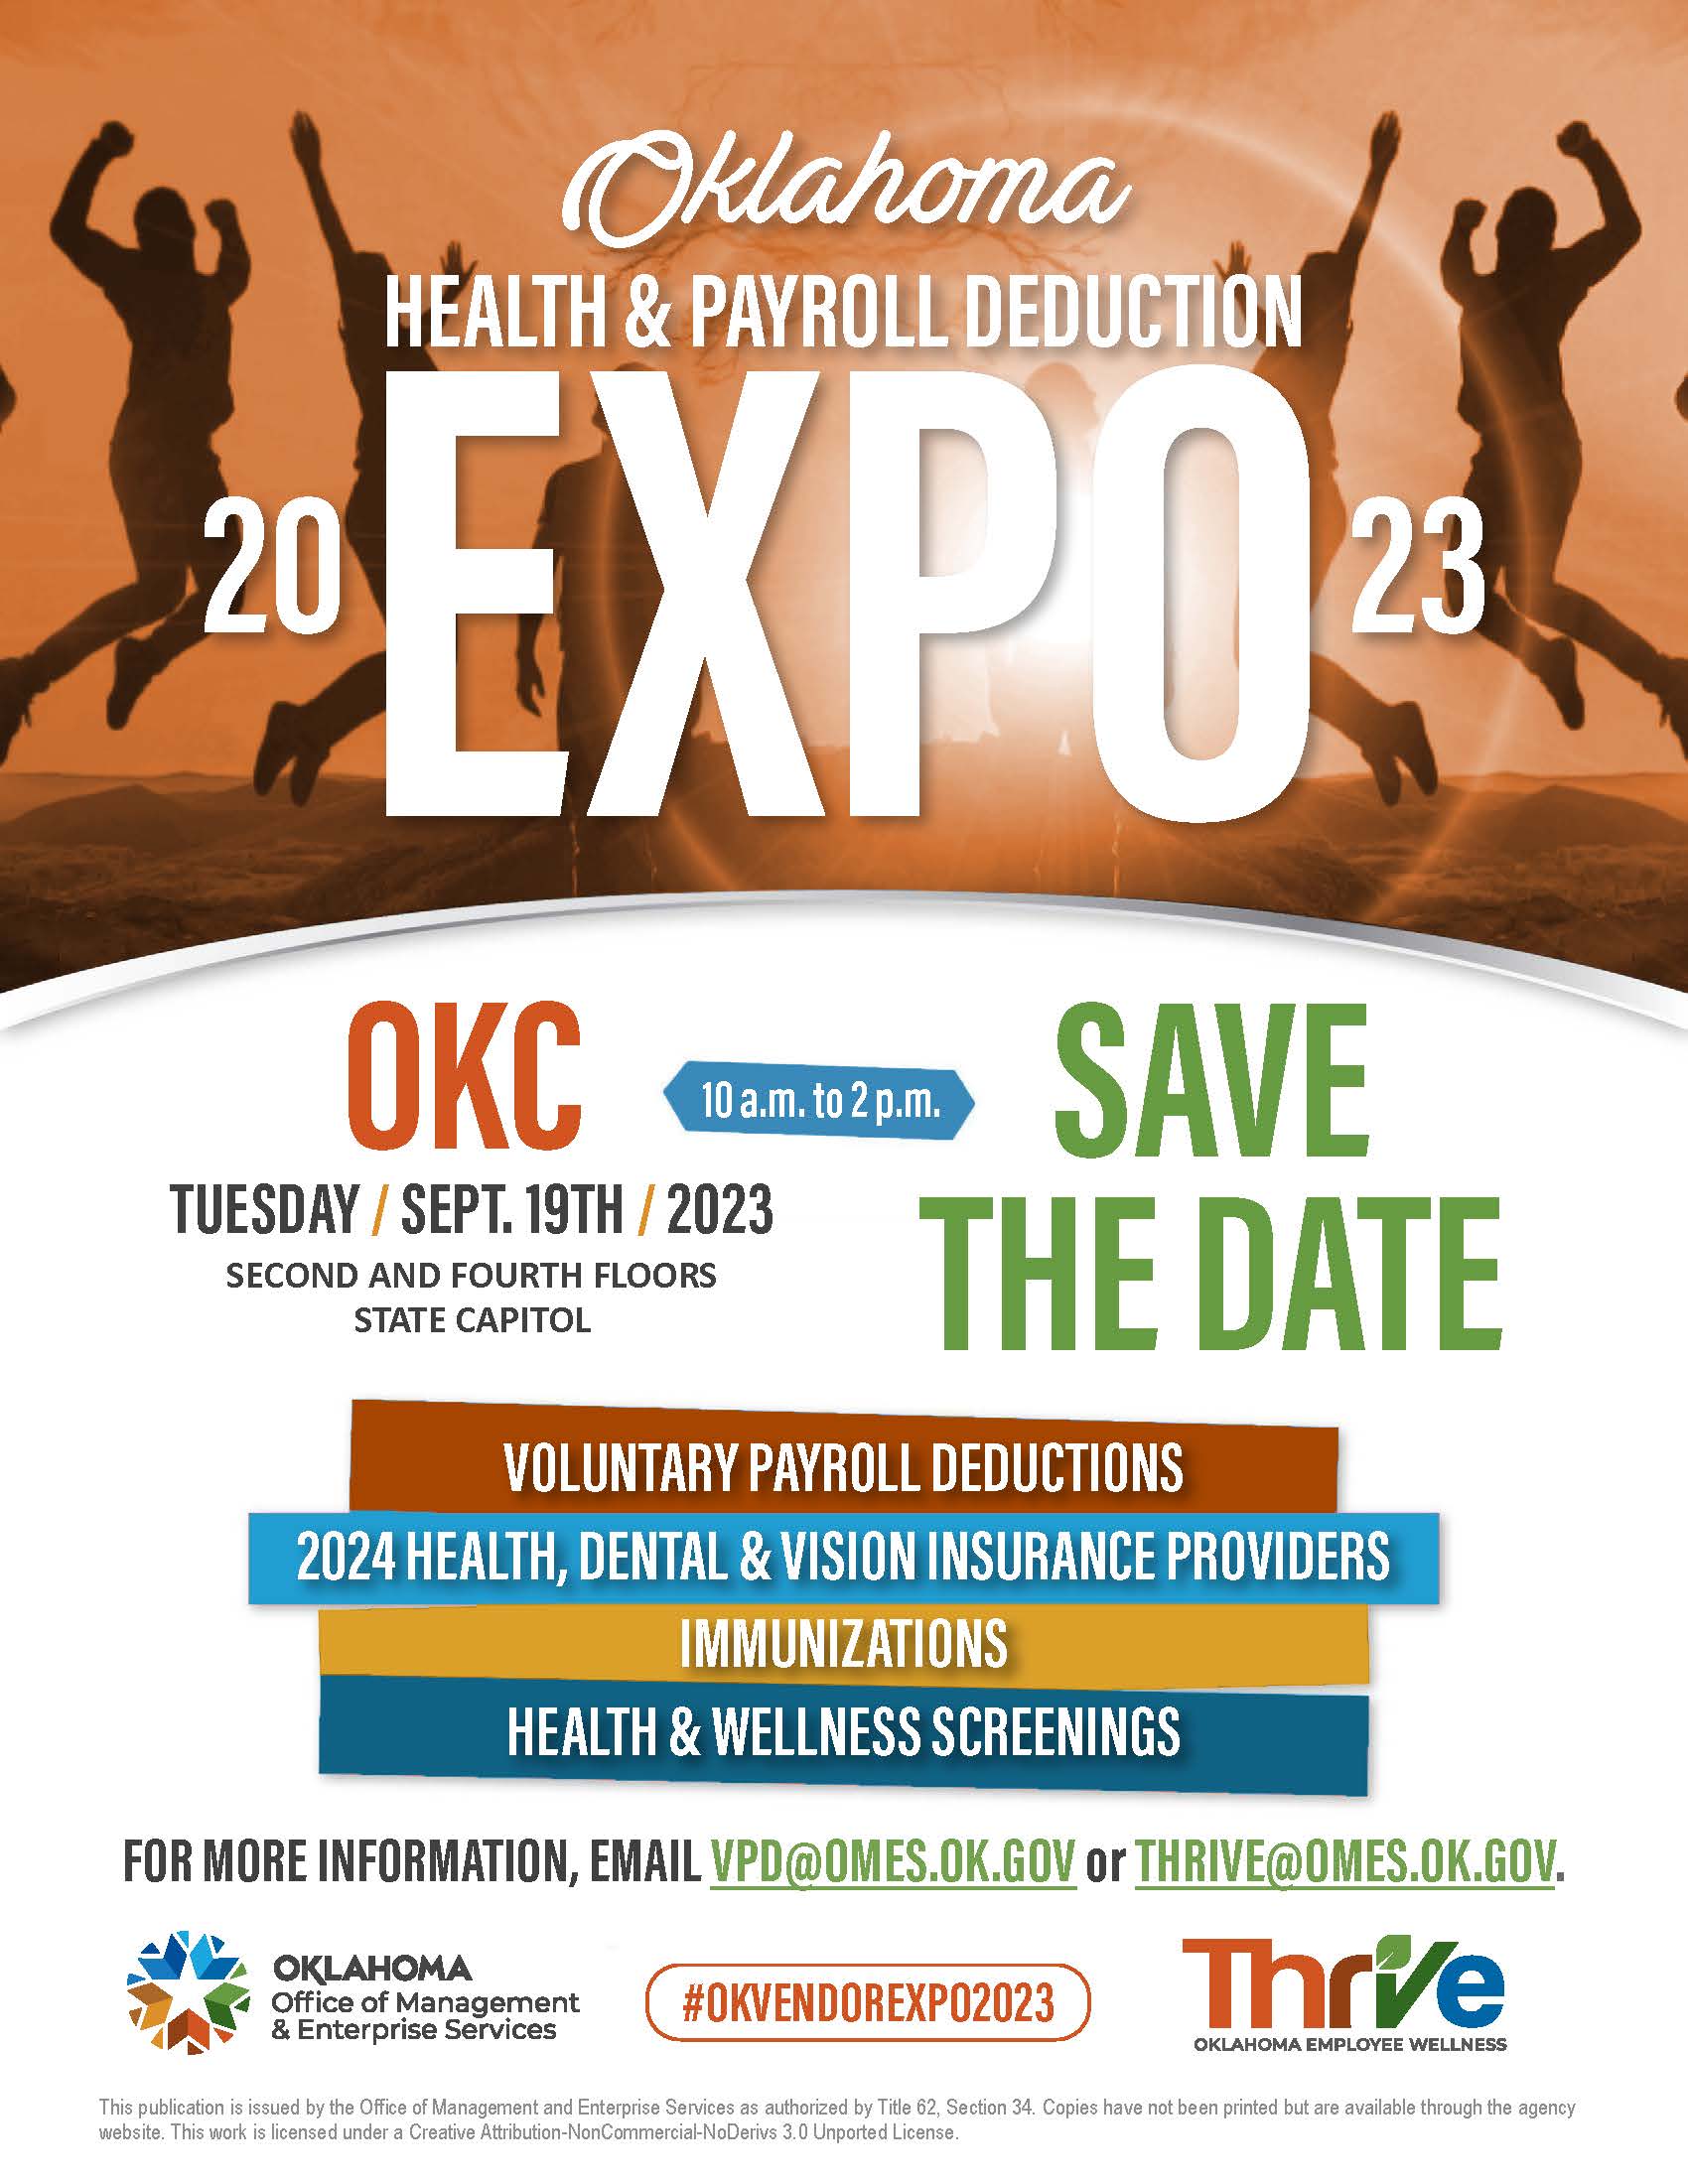 Oklahoma Health and Payroll Deduction Expo 2023